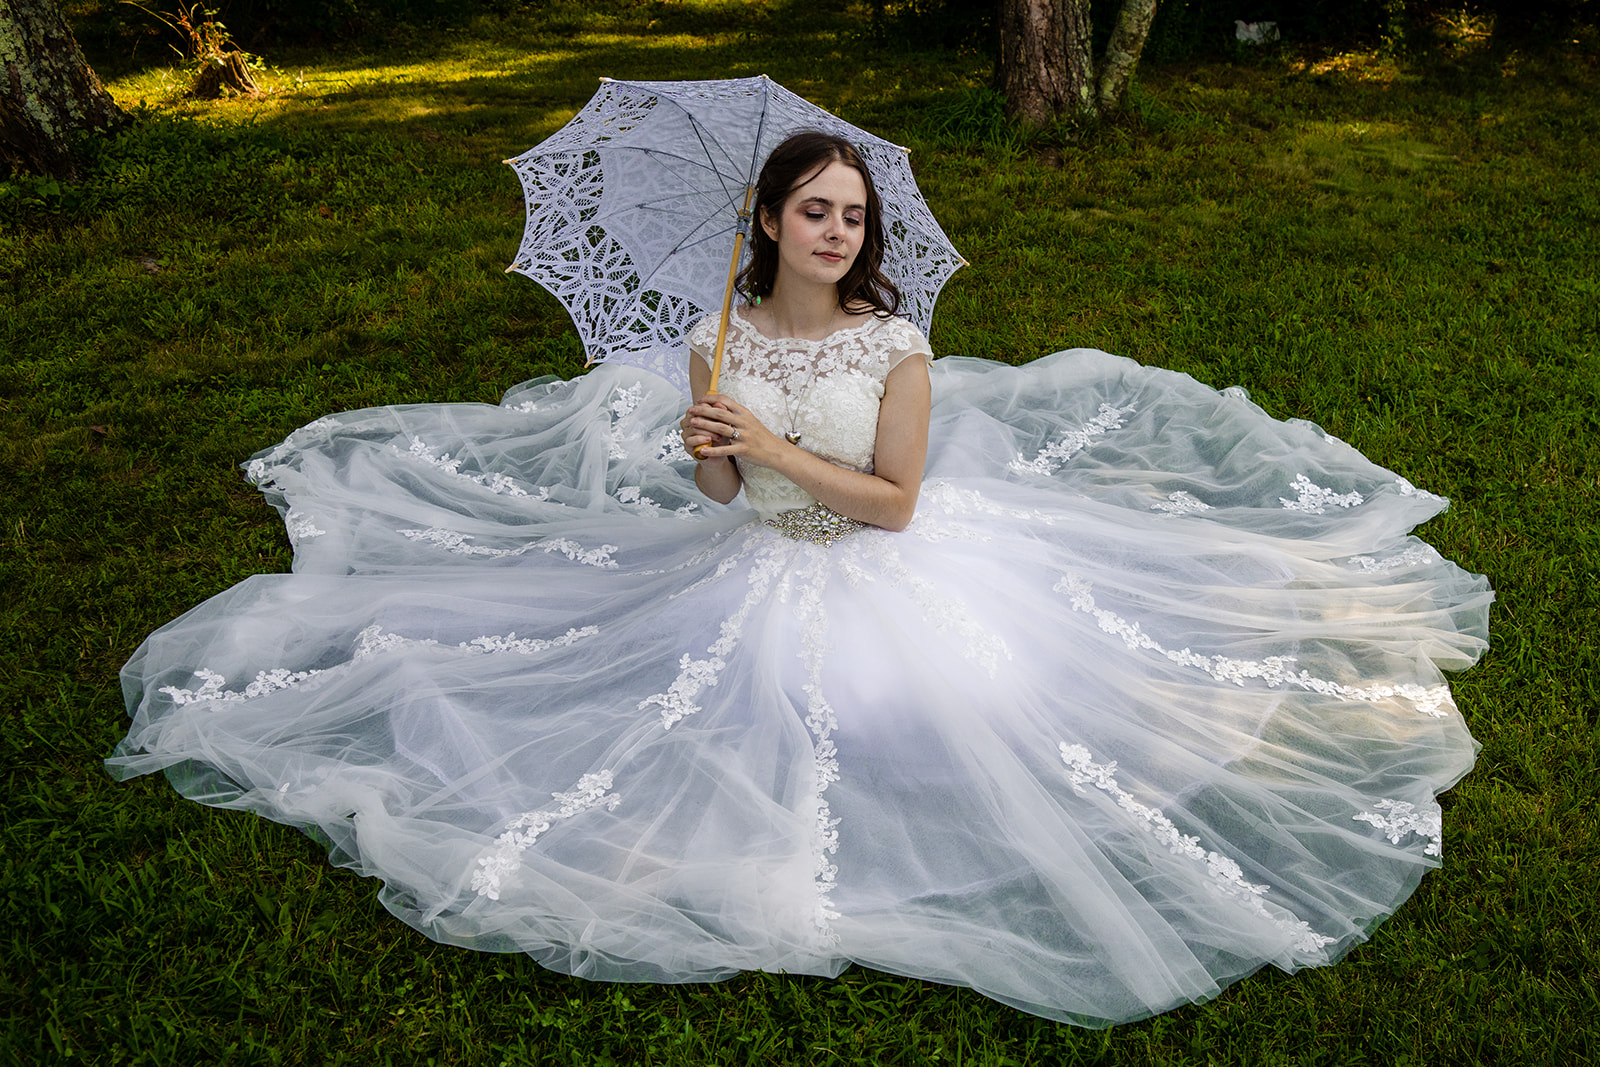 Nature-themed Fredericksburg Virginia wedding portraits of the bride by Potok's World Photography